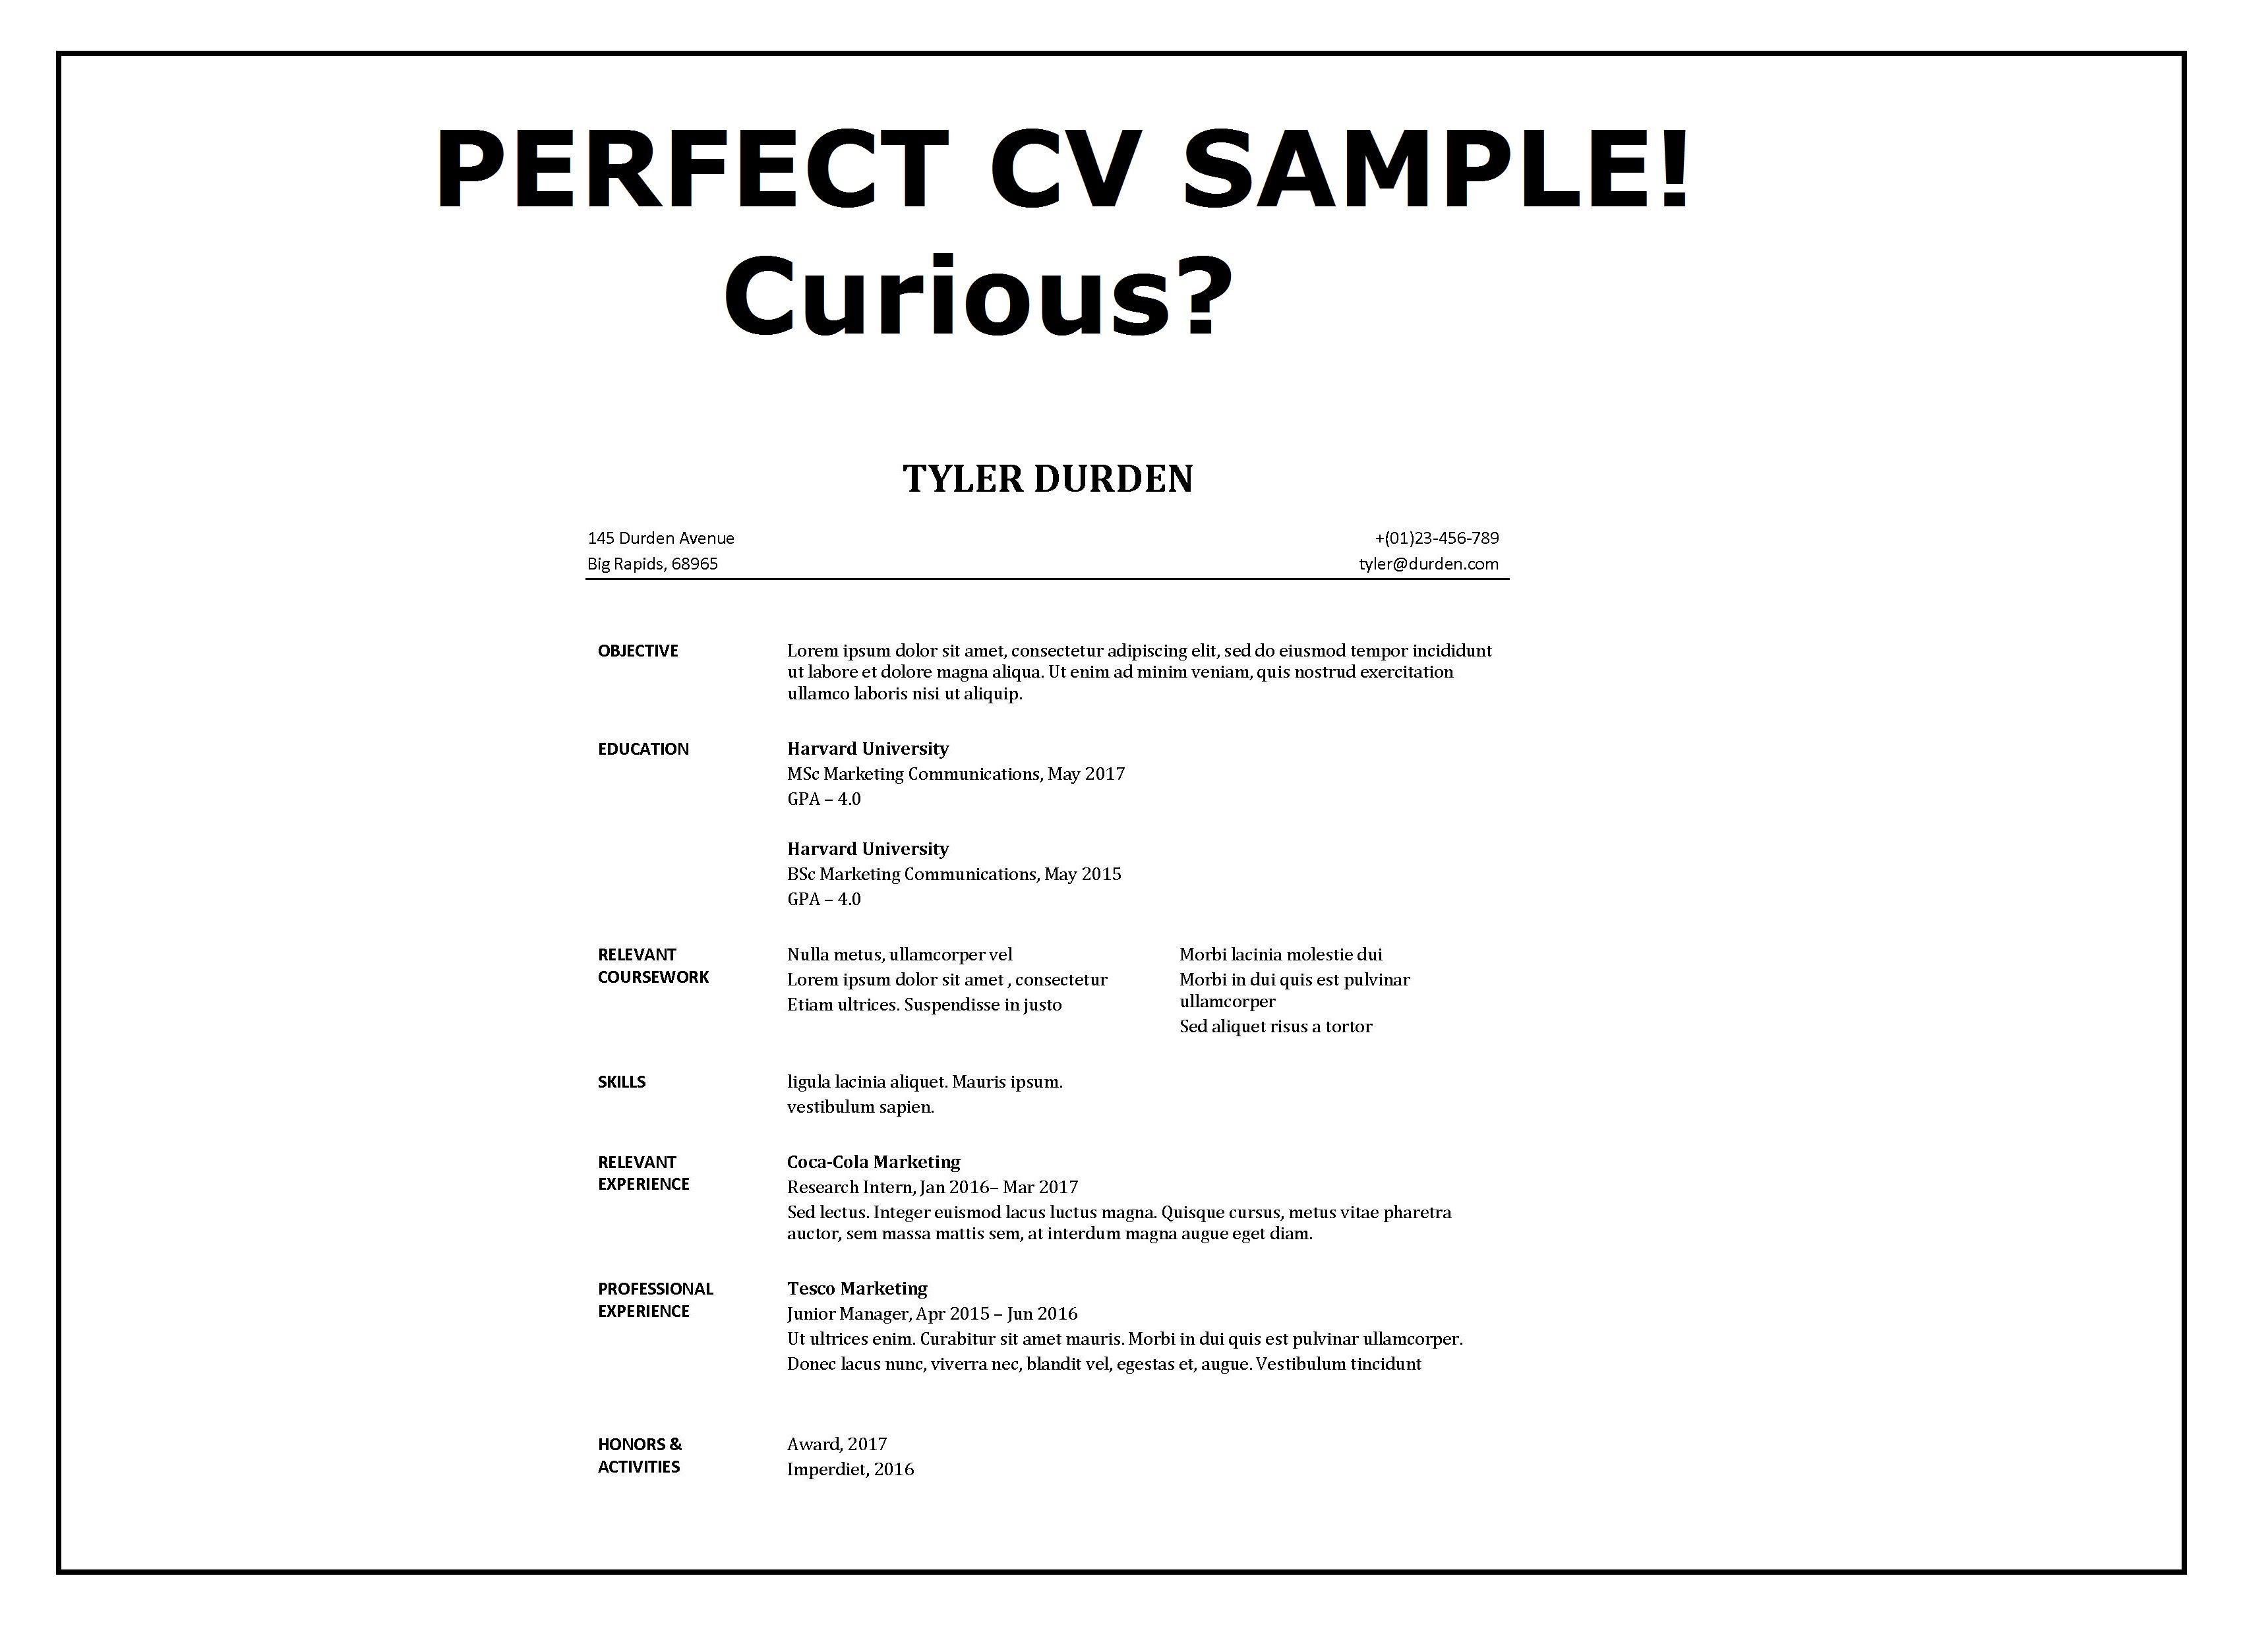 CV Sample